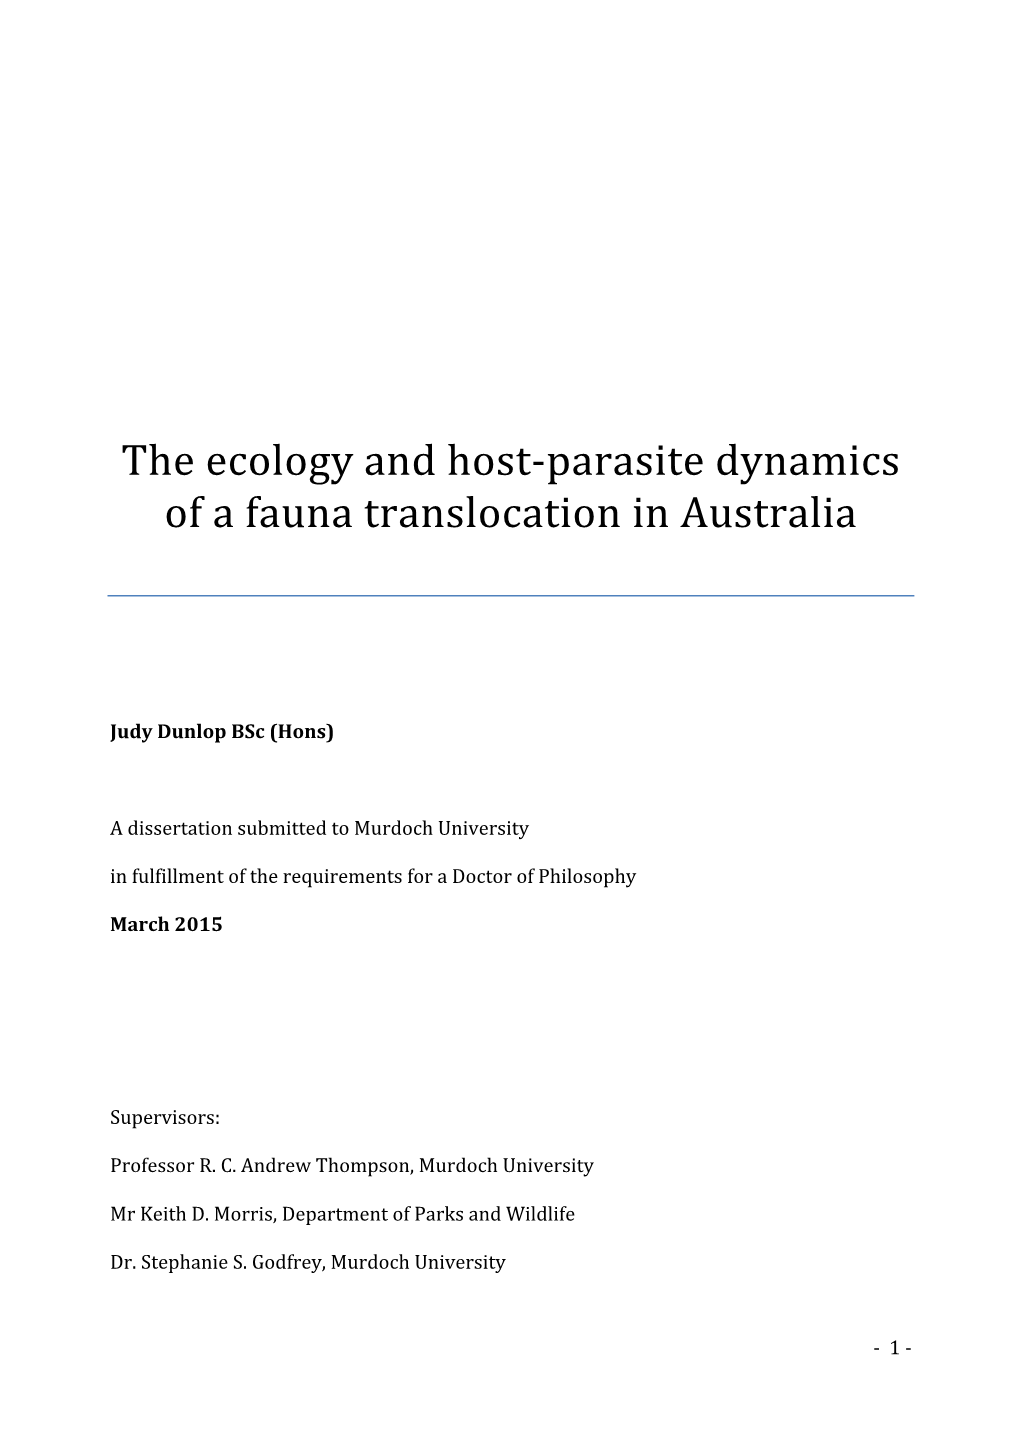 Parasite Dynamics of a Fauna Translocation in Australia